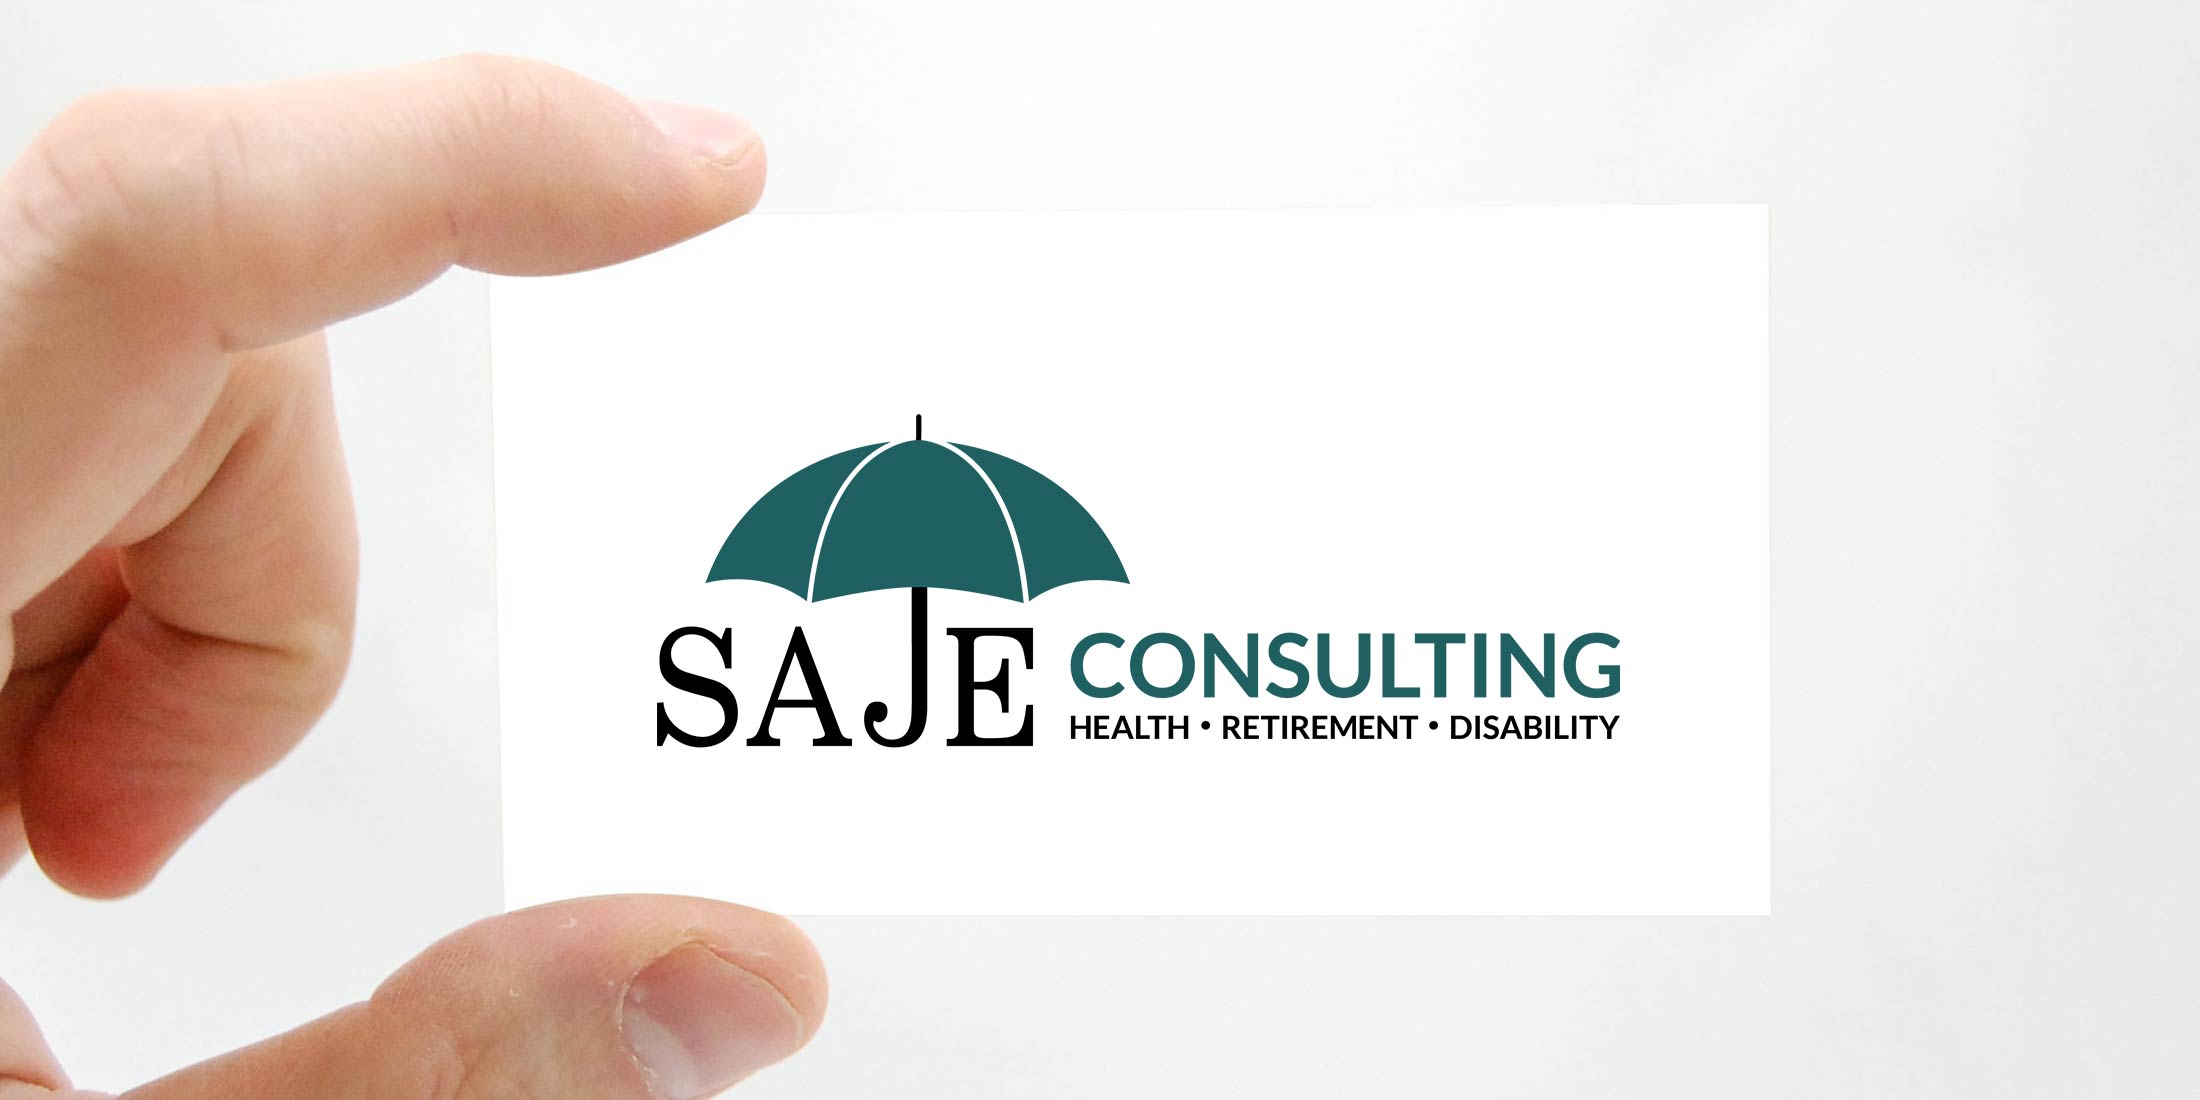 SAJE Consulting logo